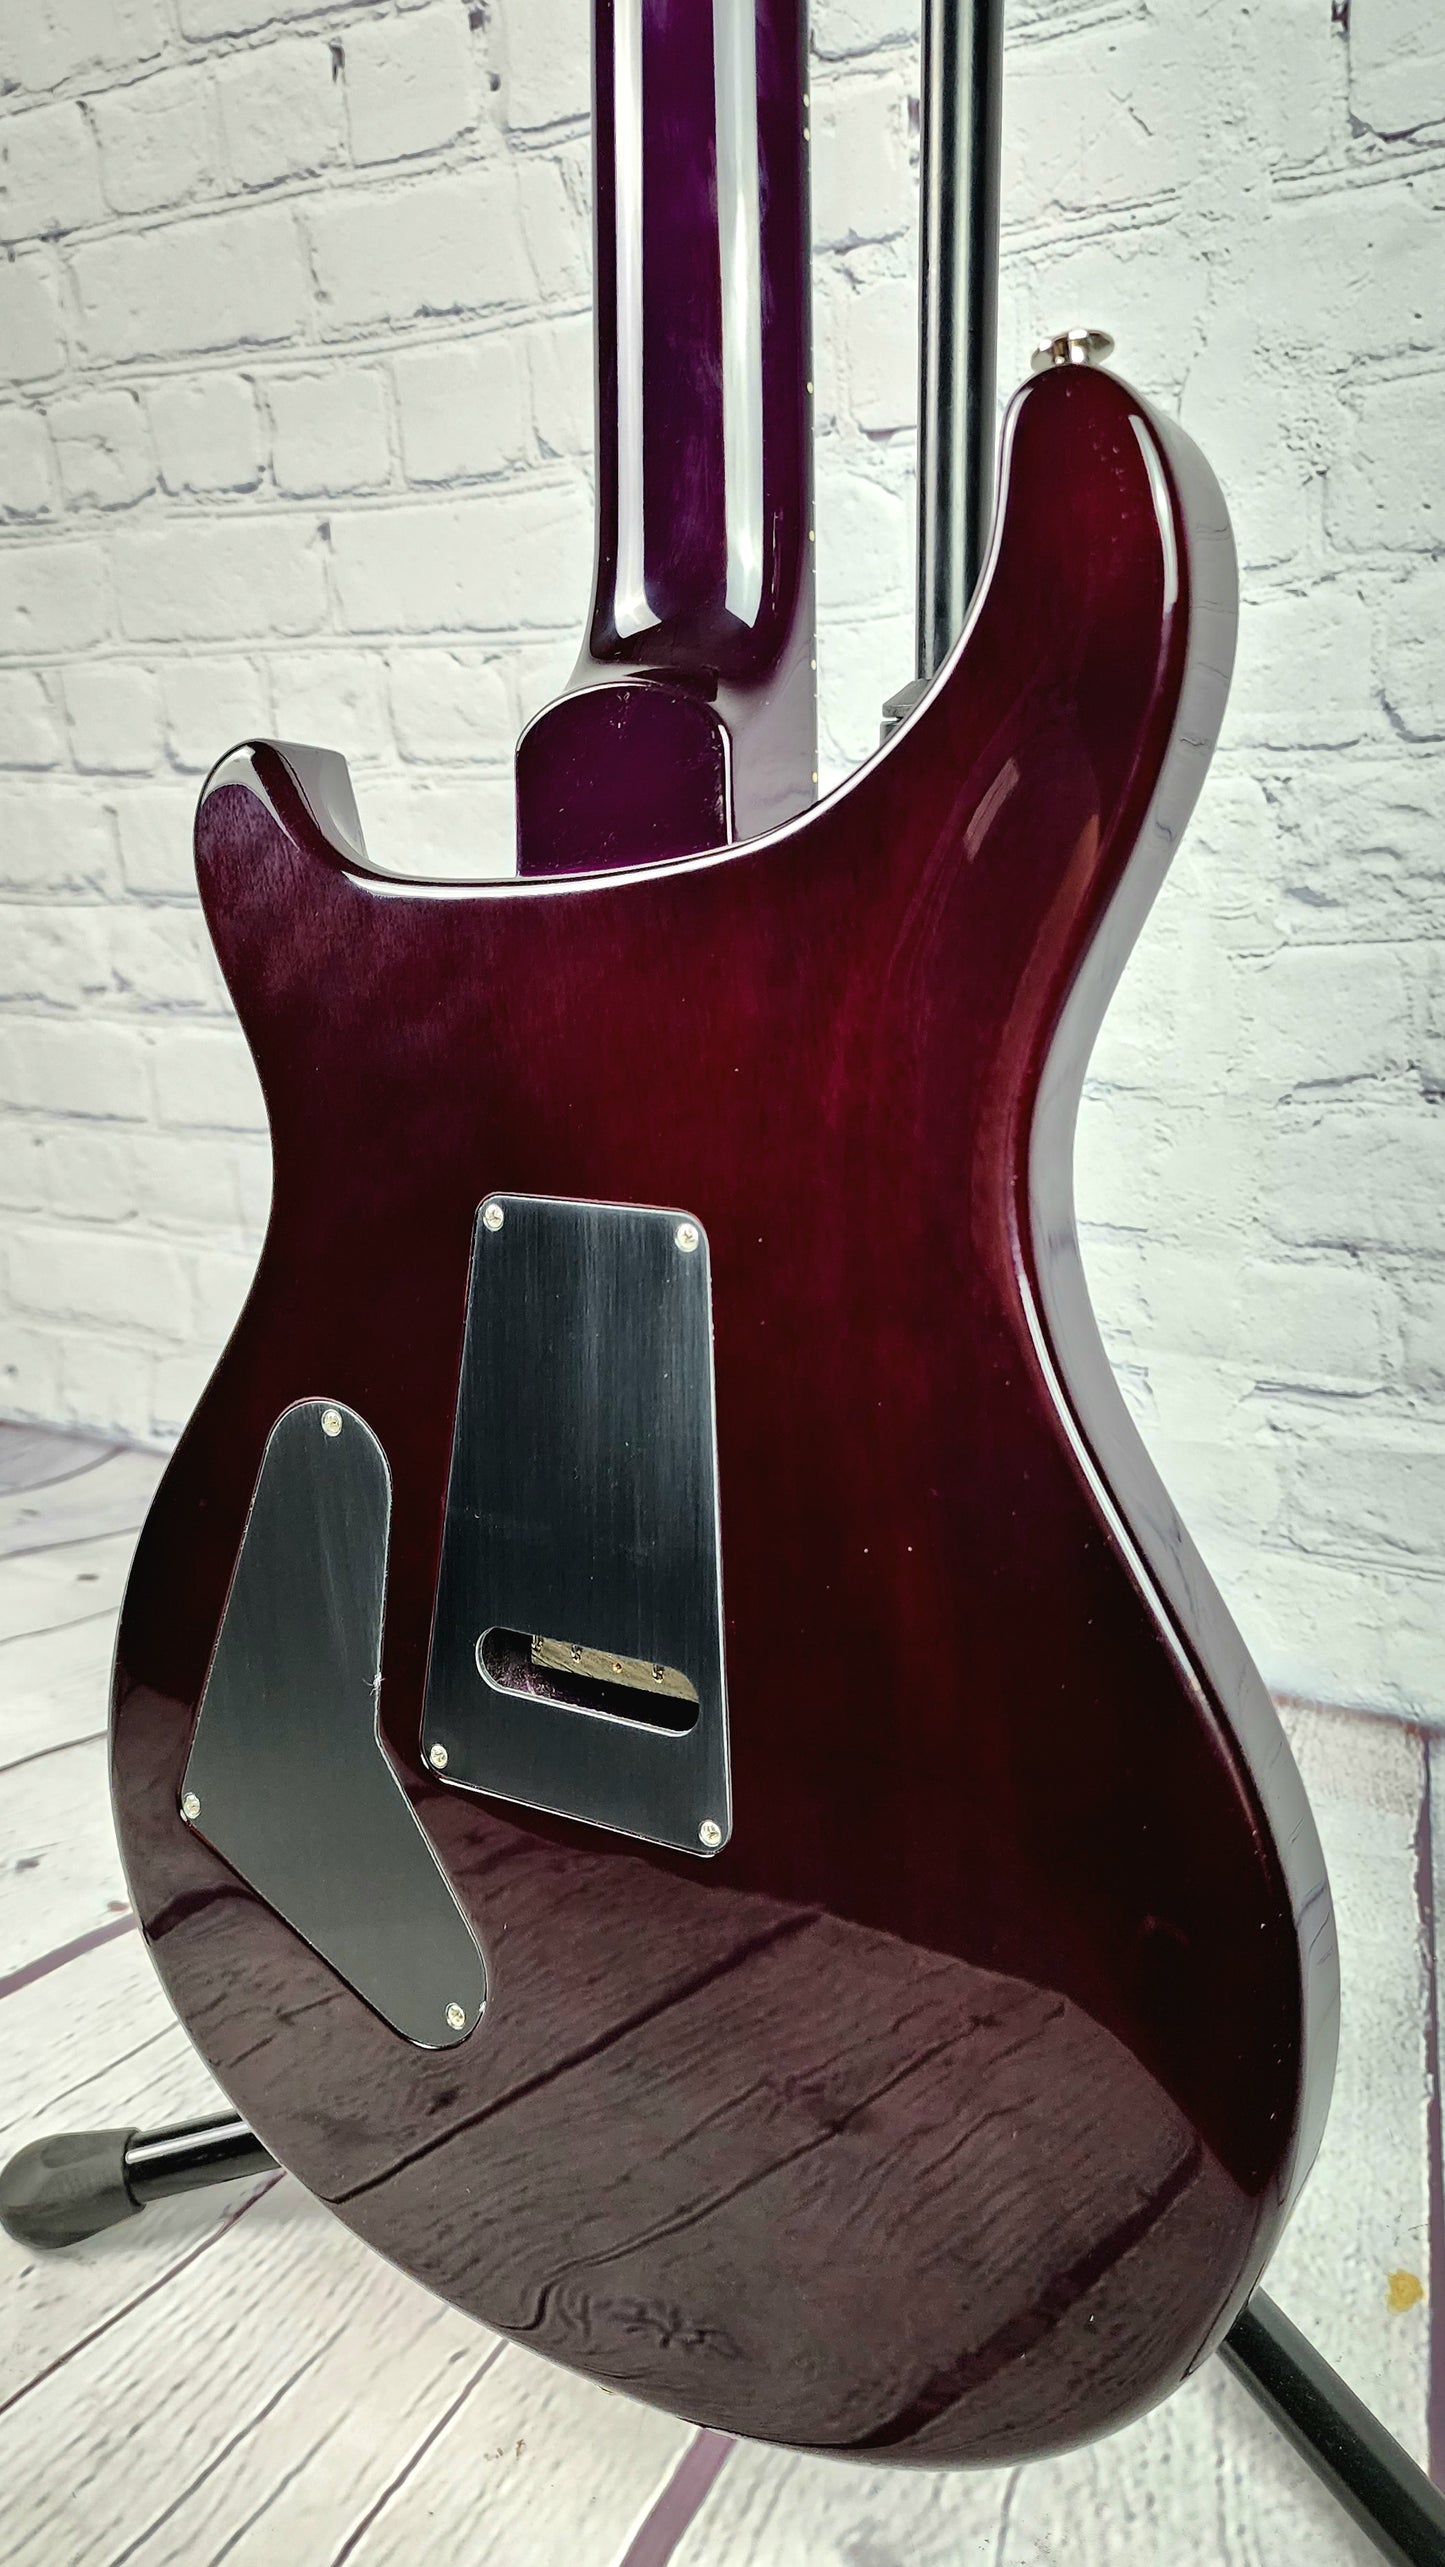 Paul Reed Smith PRS Custom 24 Floyd Electric Guitar Dark Violet Wrap